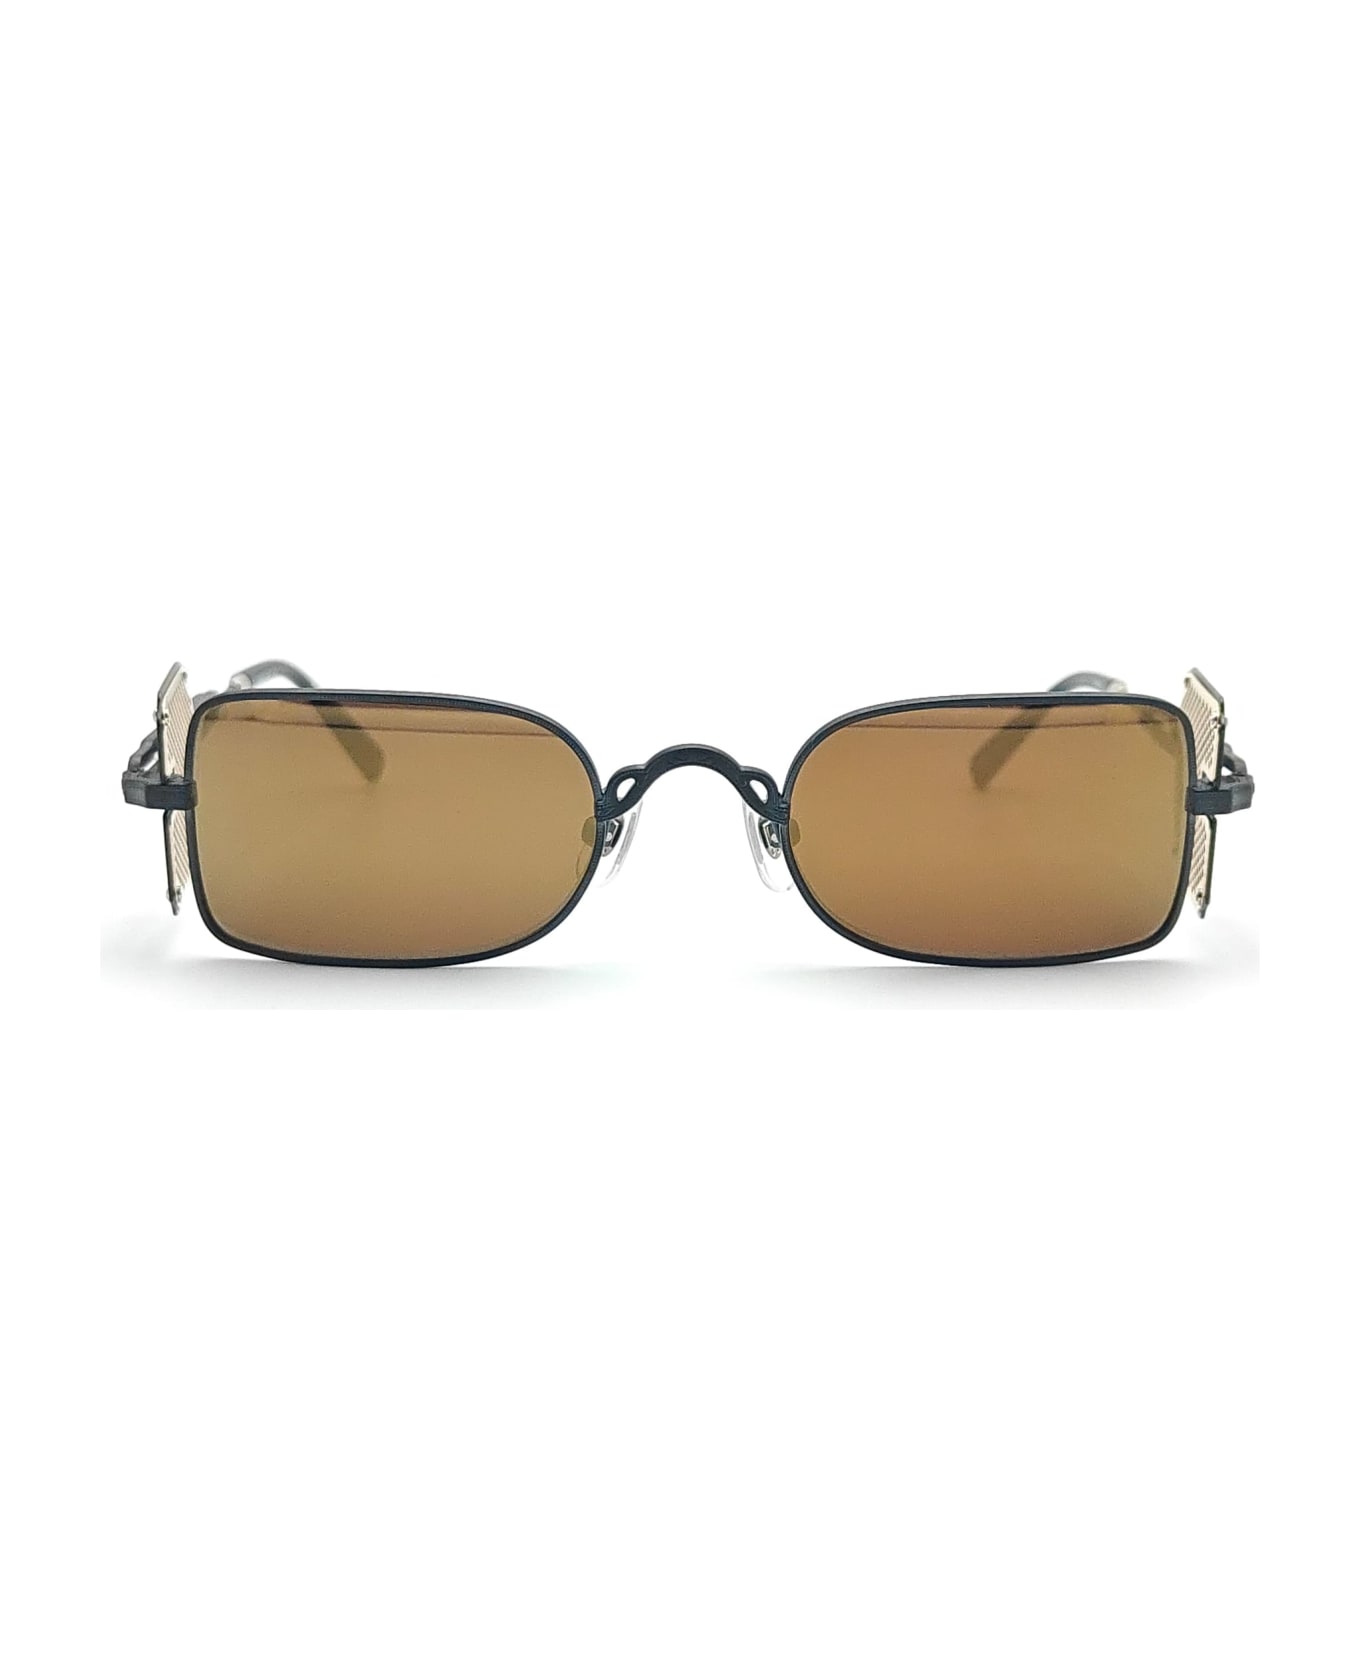 Matsuda 10611h - Matte Black / Brushed Gold Sunglasses - Matte black